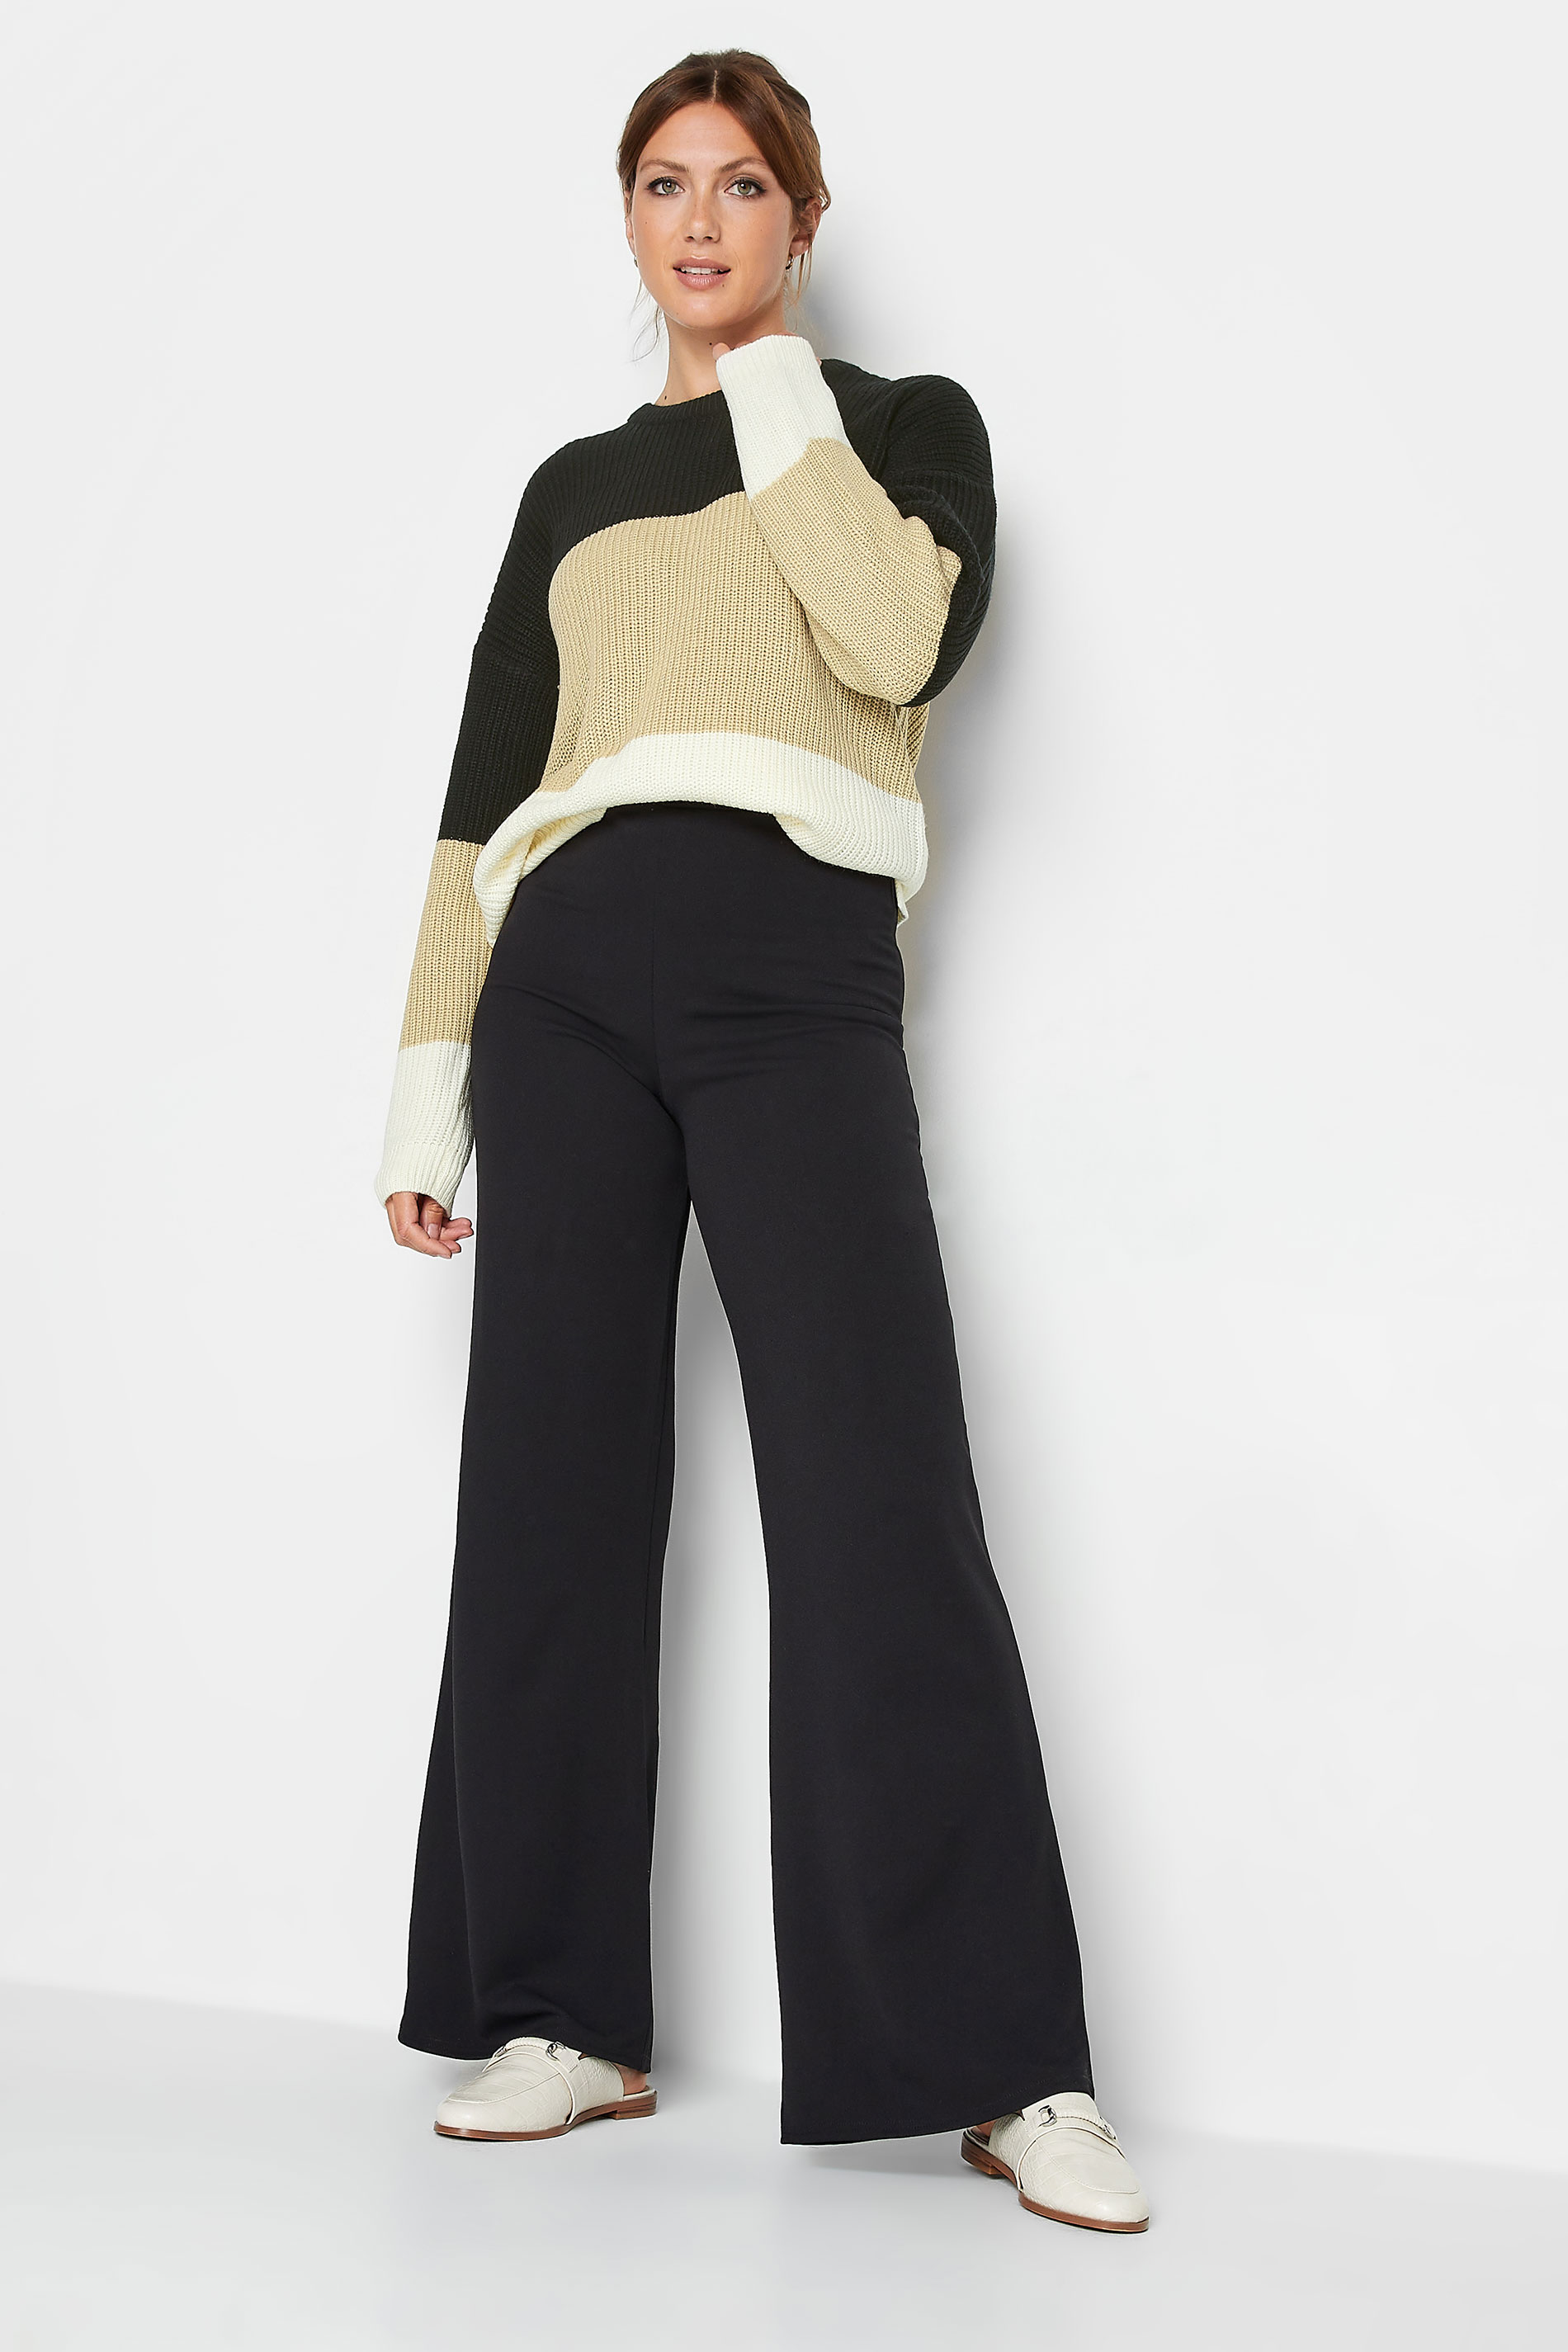 LTS Tall Womens Black & Brown Colourblock Knit Jumper | Long Tall Sally  2